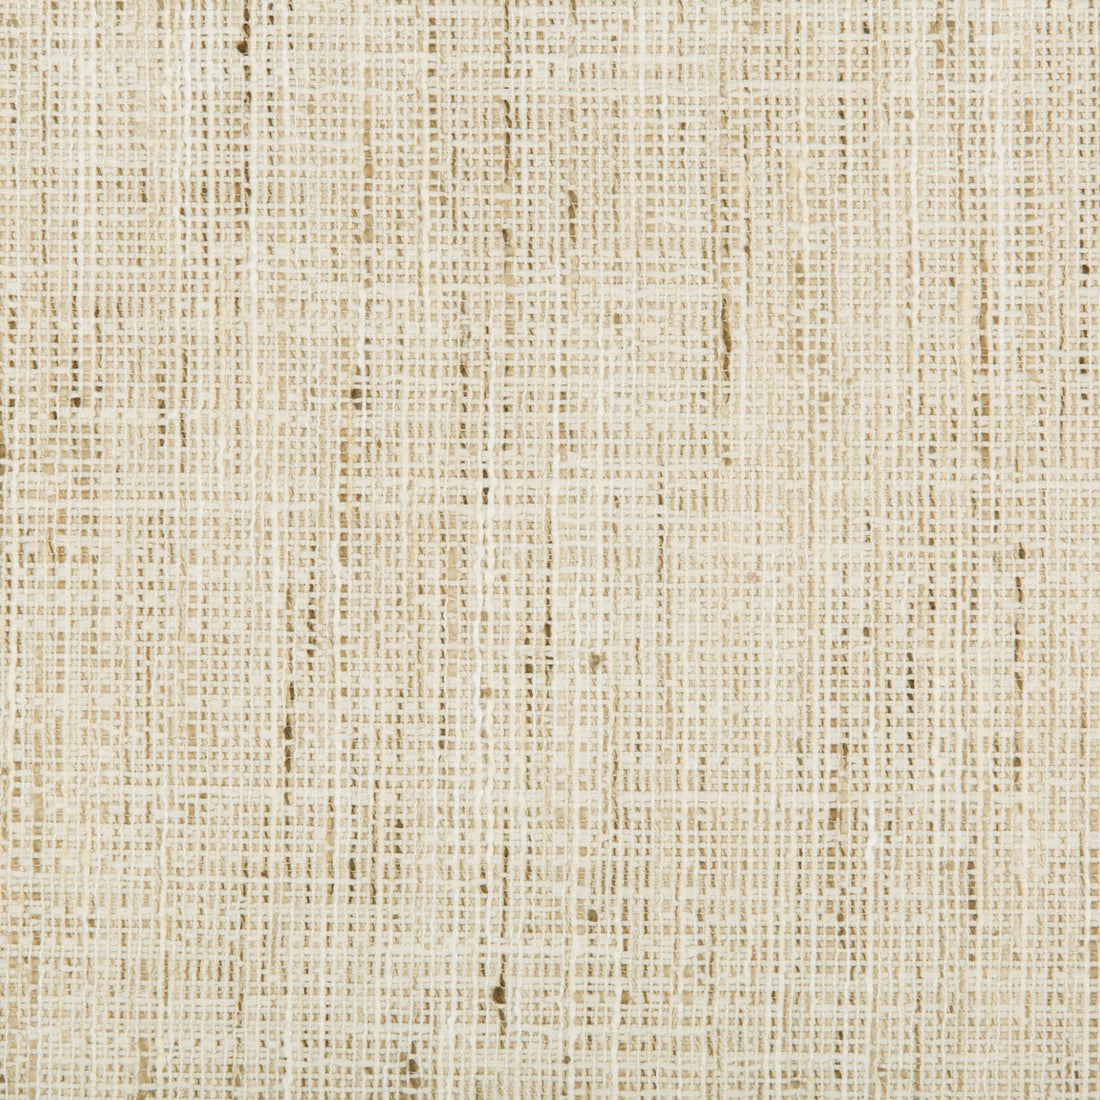 Kravet Smart fabric in 35324-16 color - pattern 35324.16.0 - by Kravet Smart in the Performance Kravetarmor collection